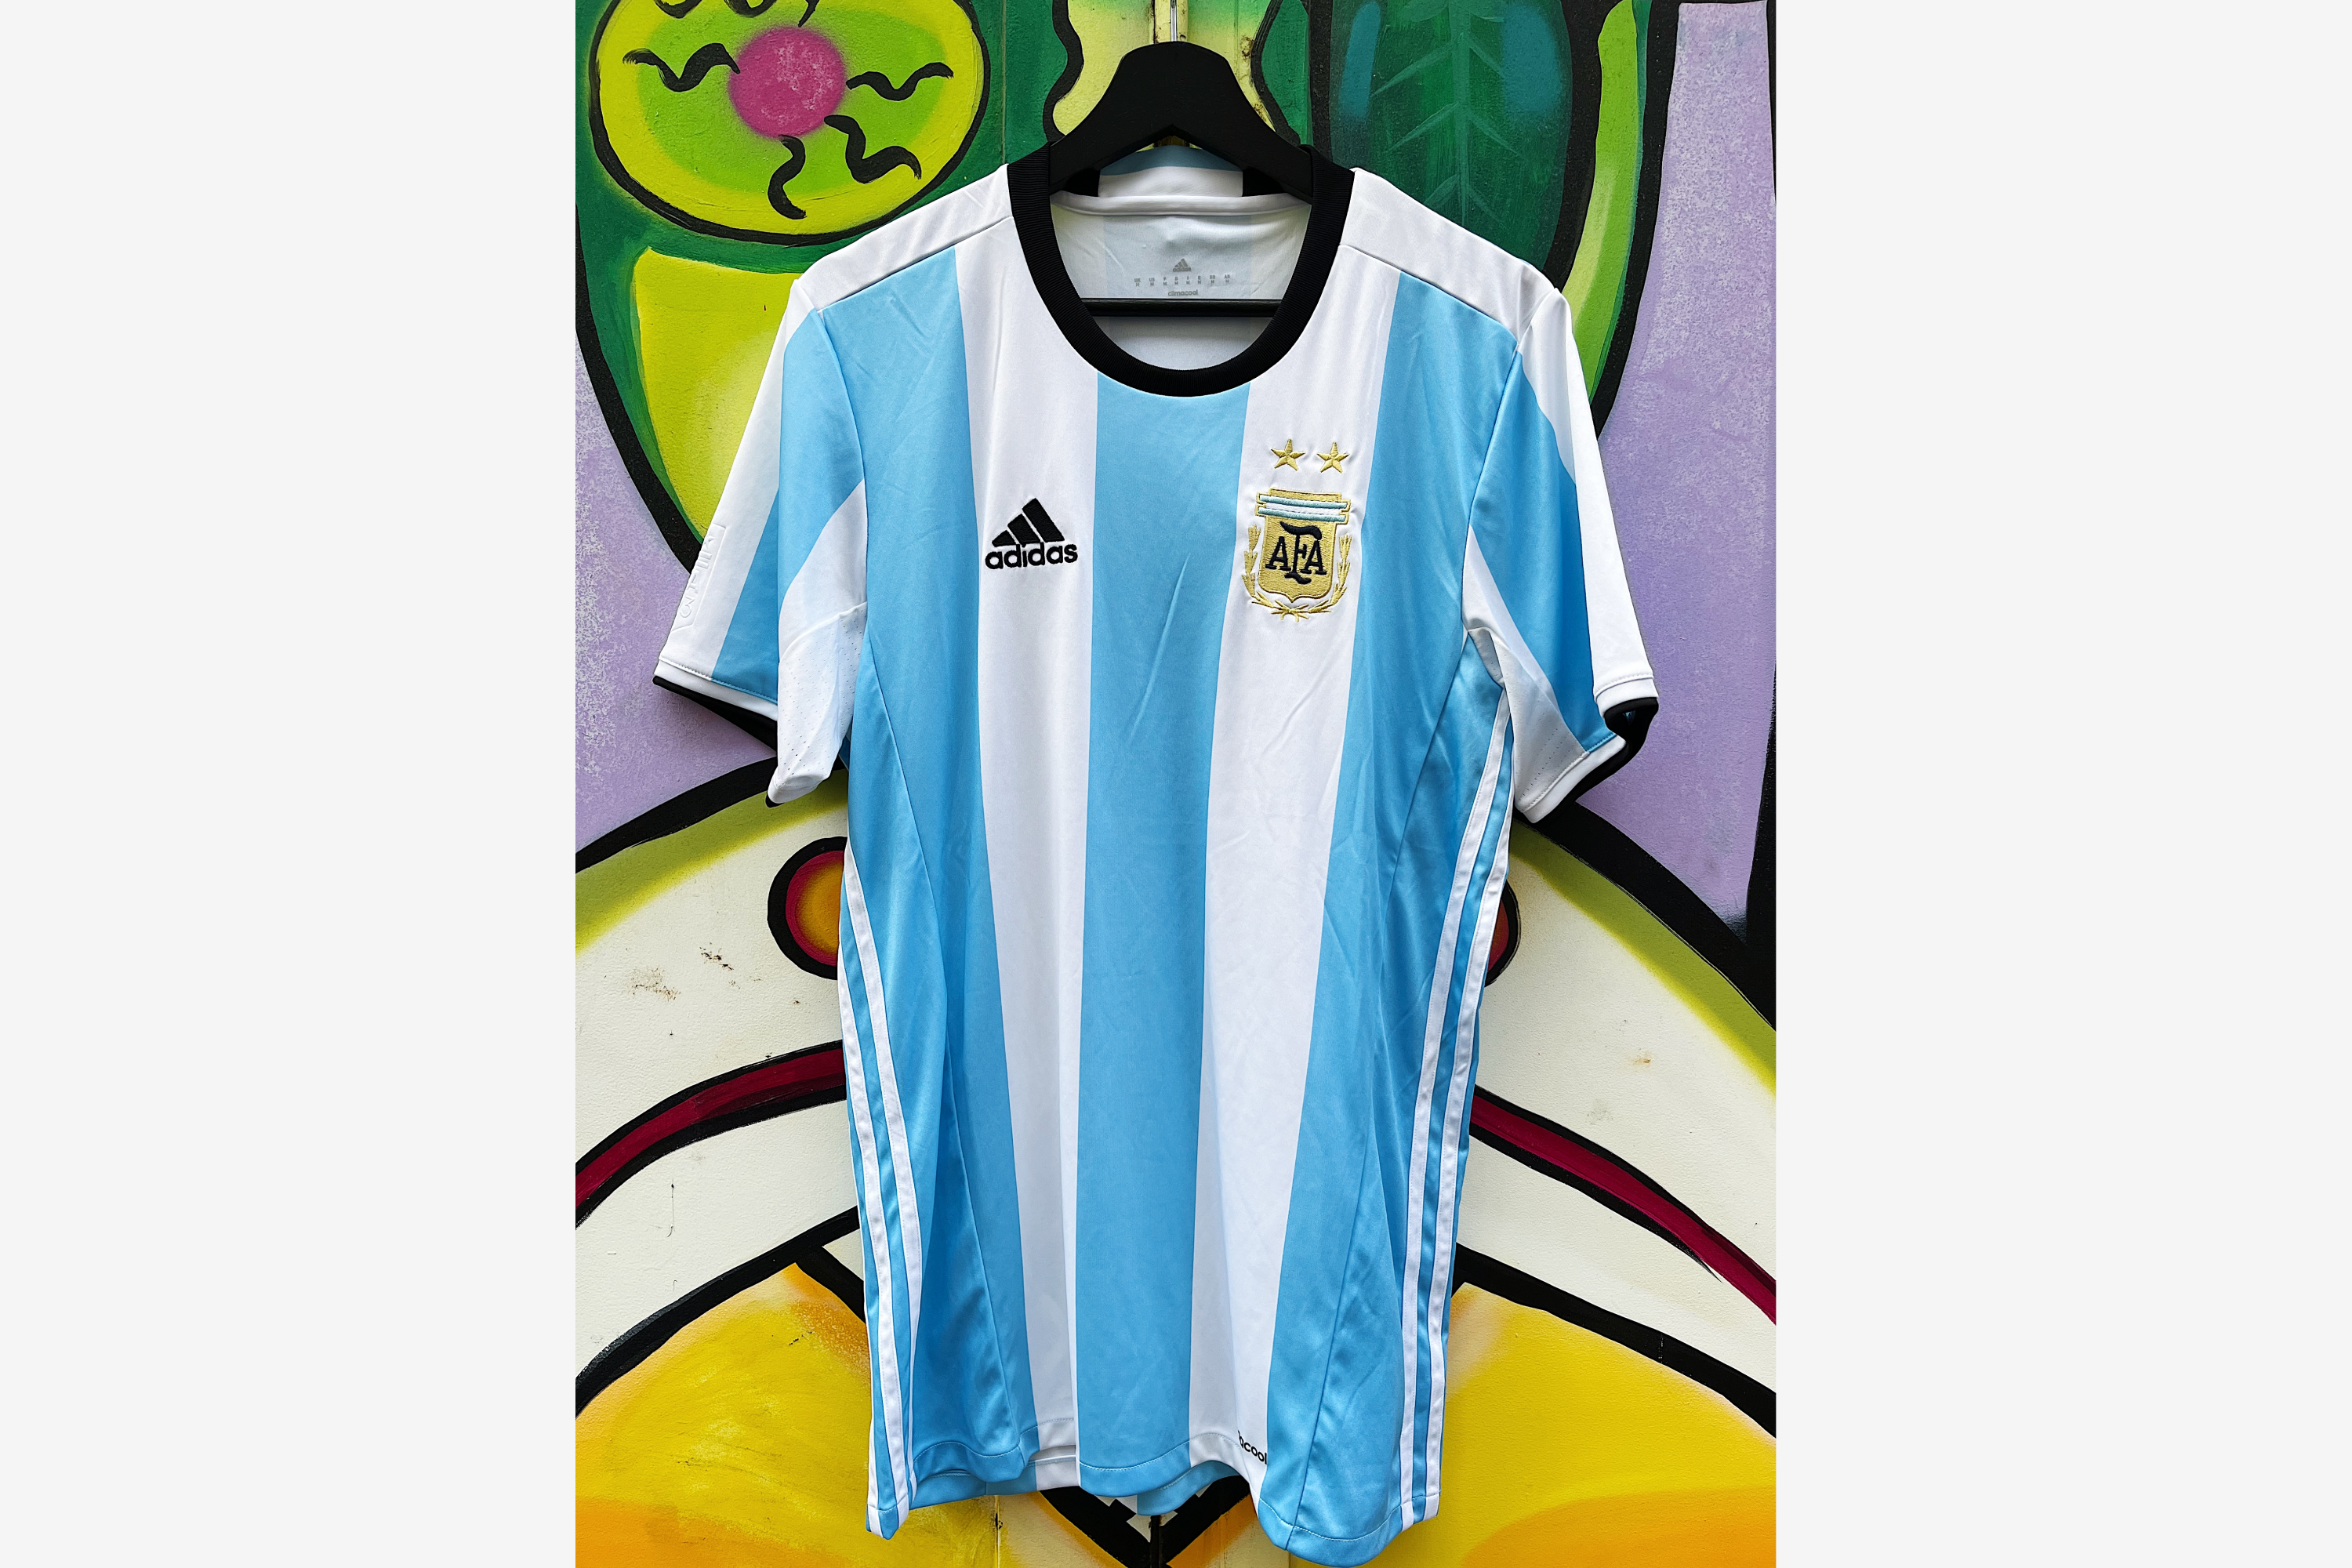 Adidas - Argentina 2016/17 Home Football Shirt